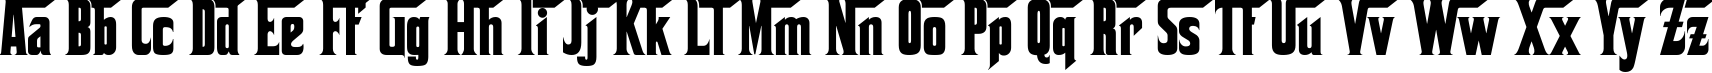 Пример написания английского алфавита шрифтом Corleone